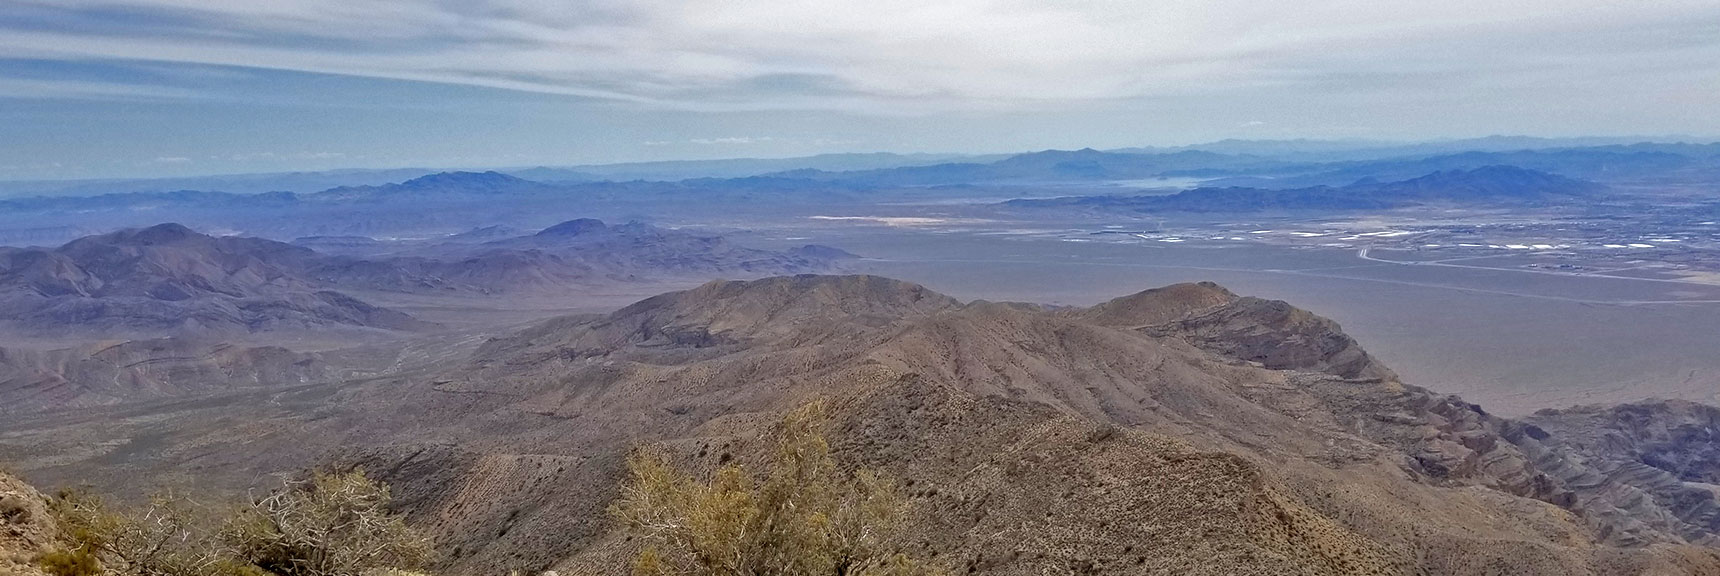 View of Lake Mead and East of Las Vegas from Near Gass Peak Eastern Summit | Gass Peak Eastern Summit Ultra-marathon Adventure, Nevada